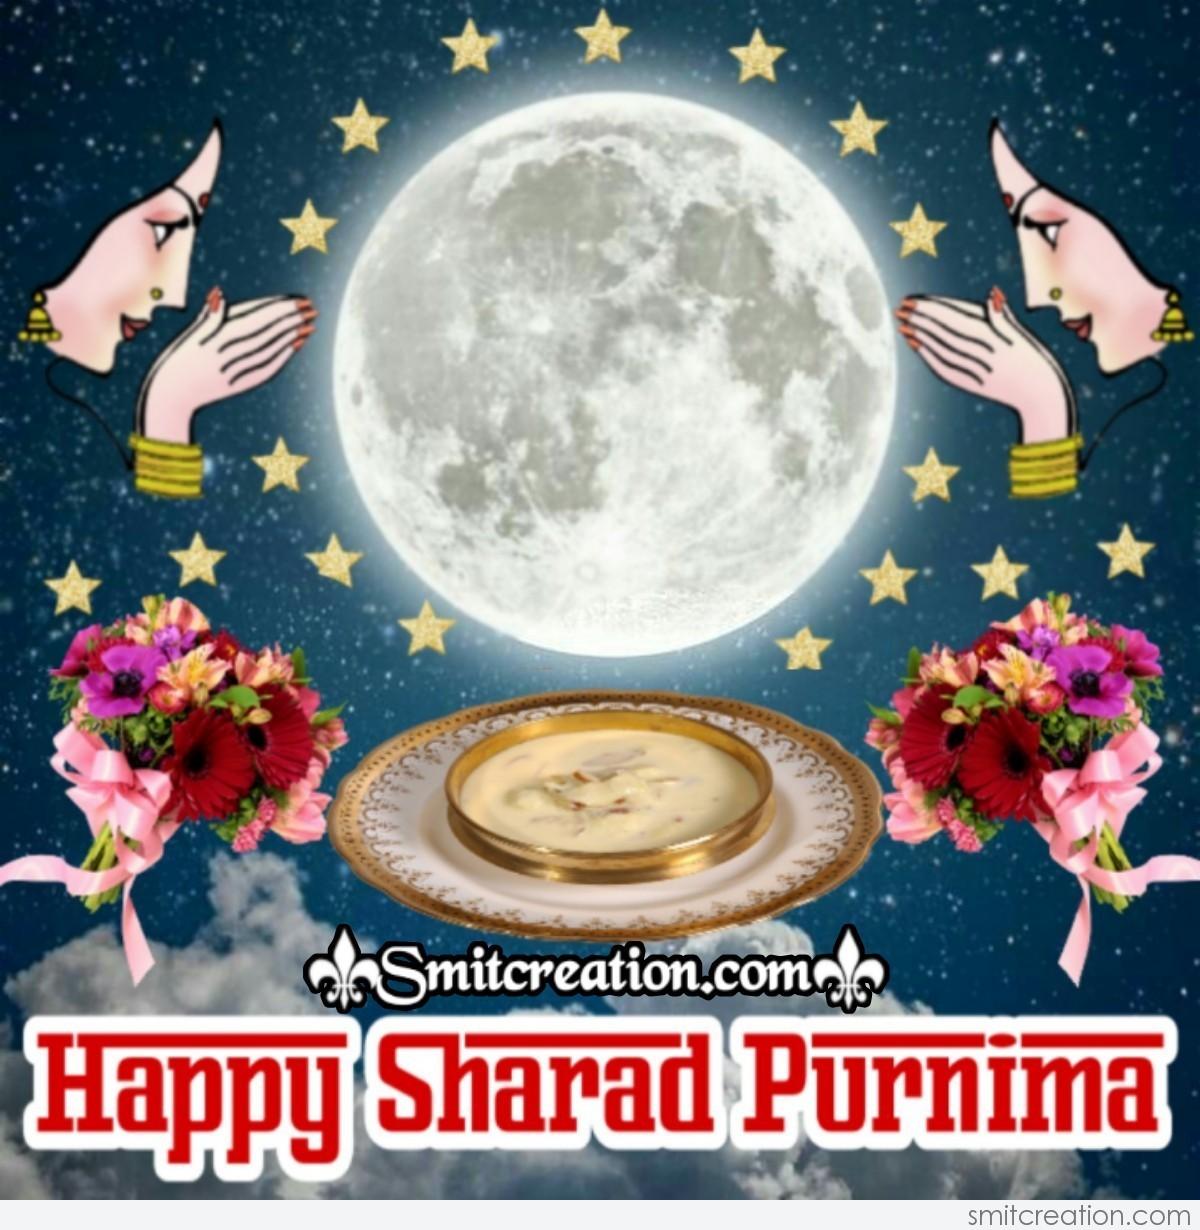 Happy Sharad Purnima Greeting 